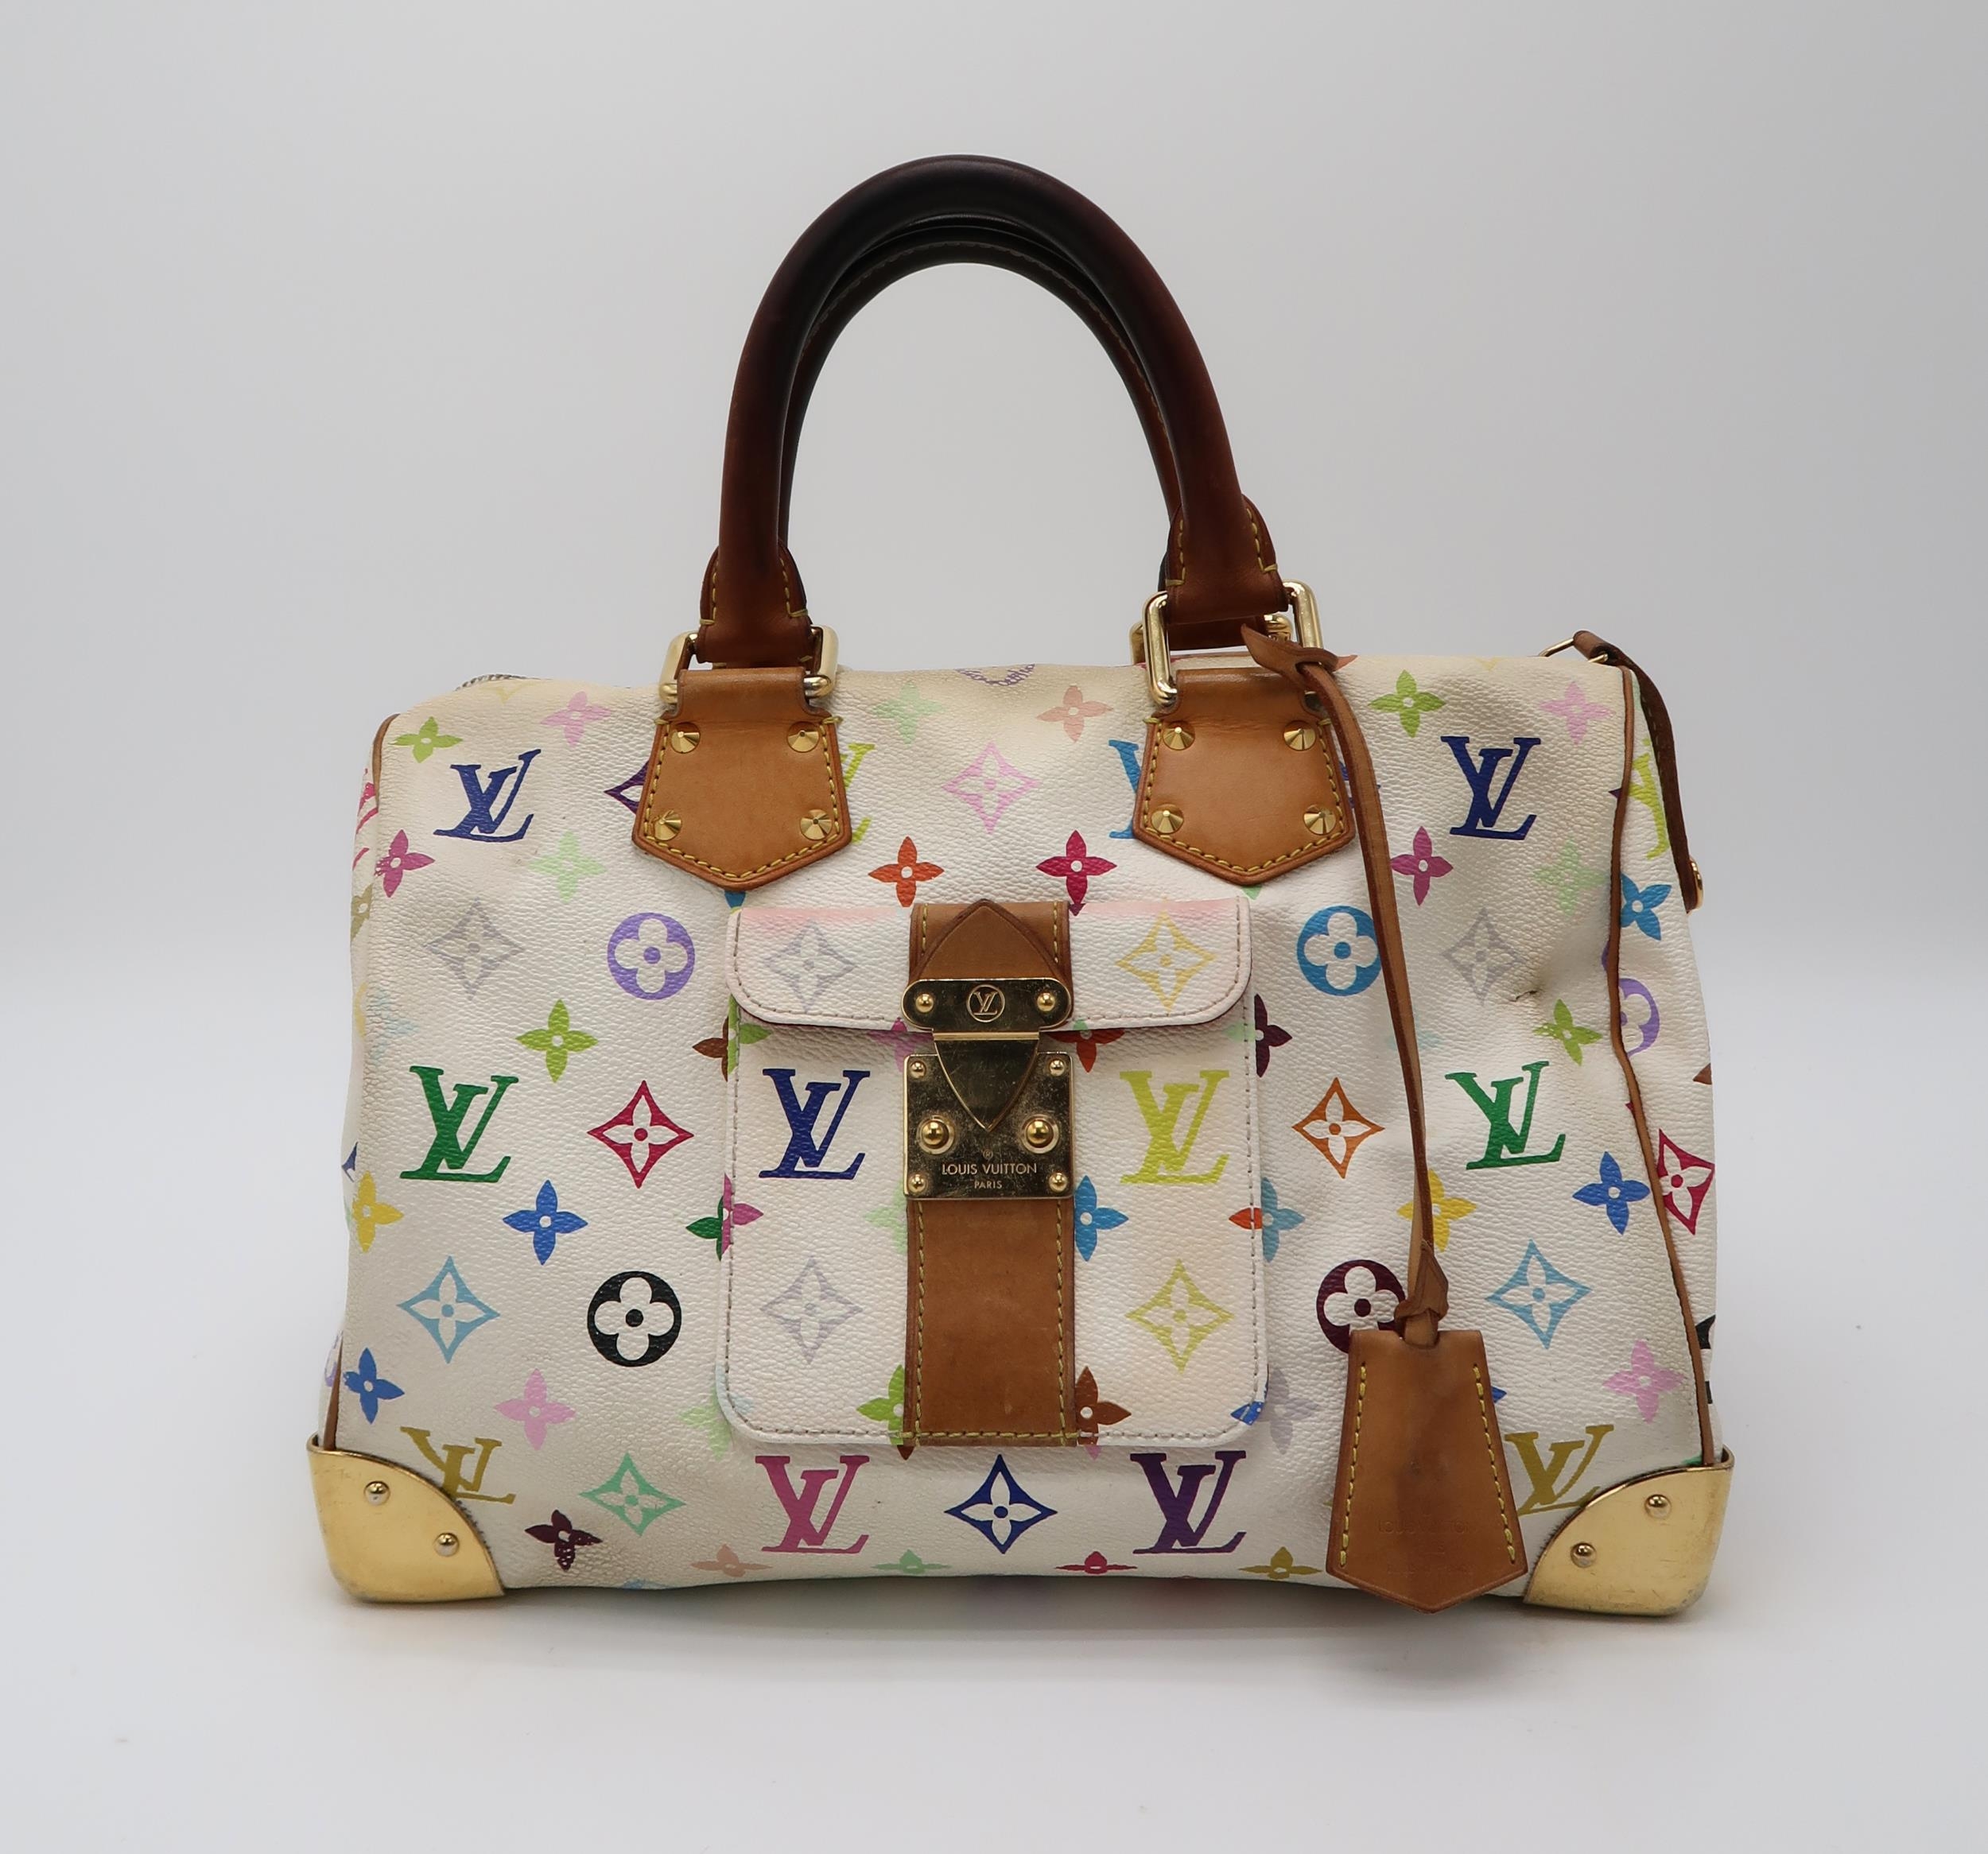 Sold at Auction: Louis Vuitton Multicolor Speedy 30 Bron